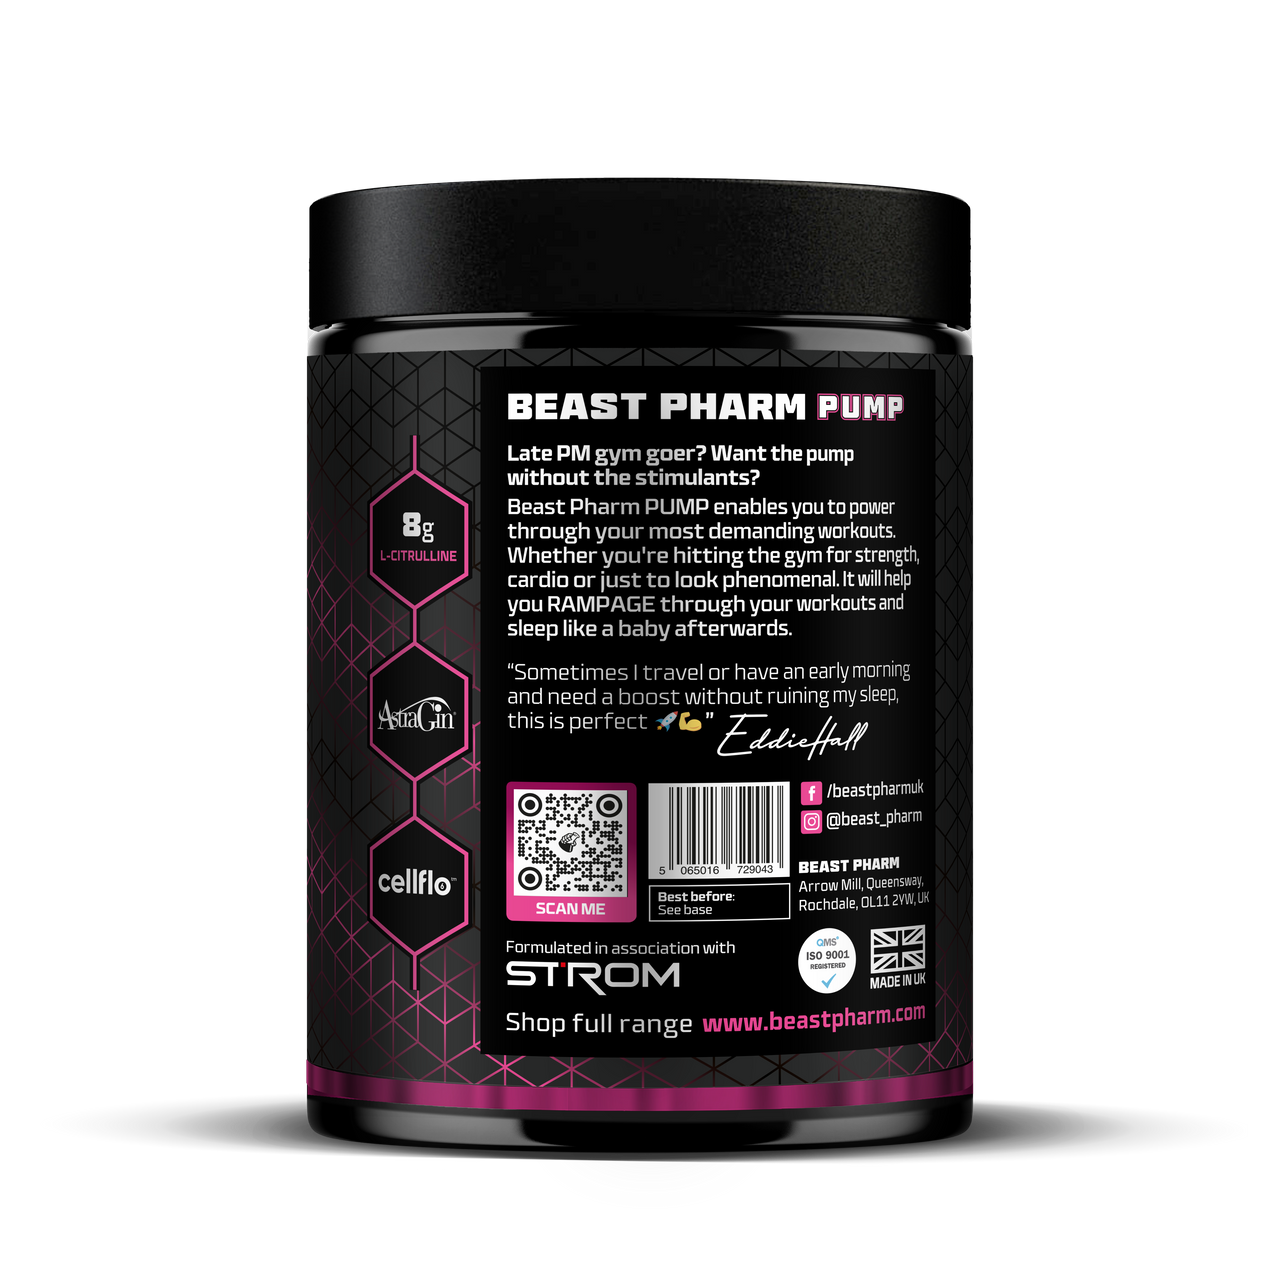 Beast Pharm PUMP Stimulant Free Pre-Workout